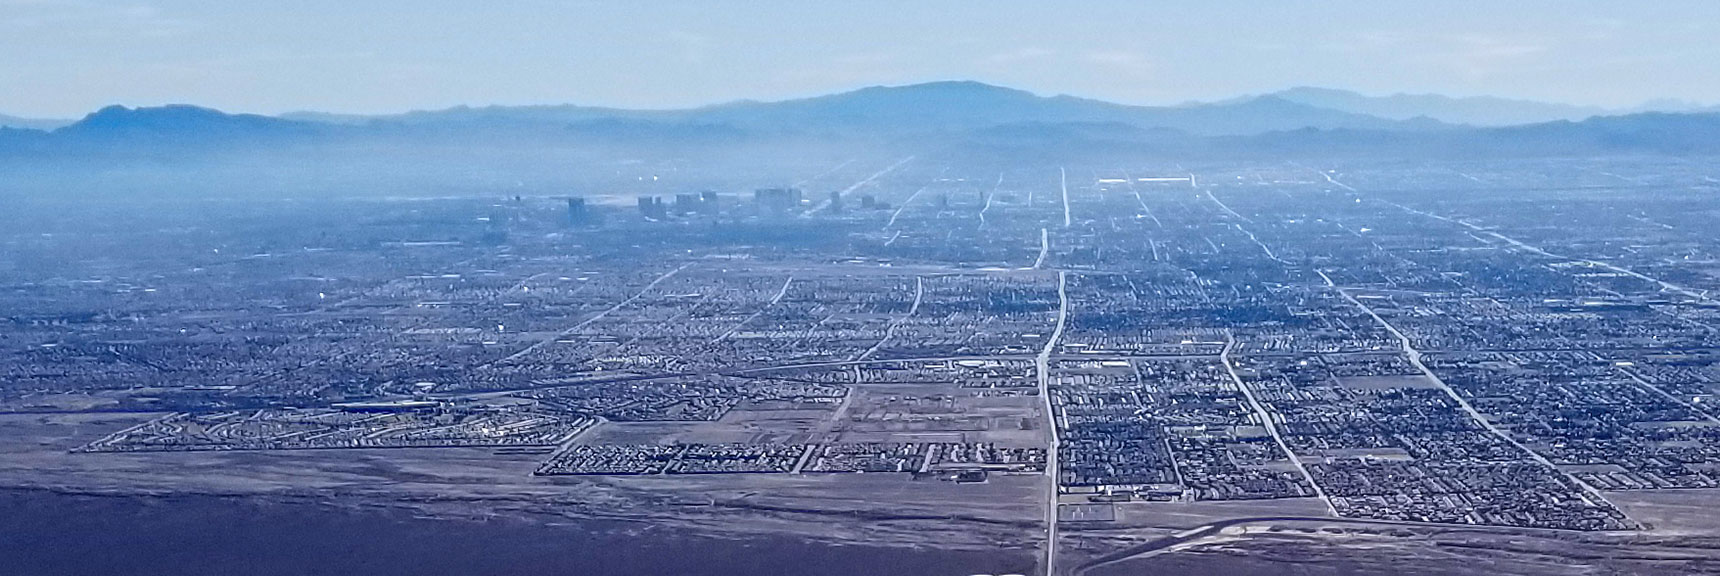 Las Vegas Viewed from Gass Peak, Nevada